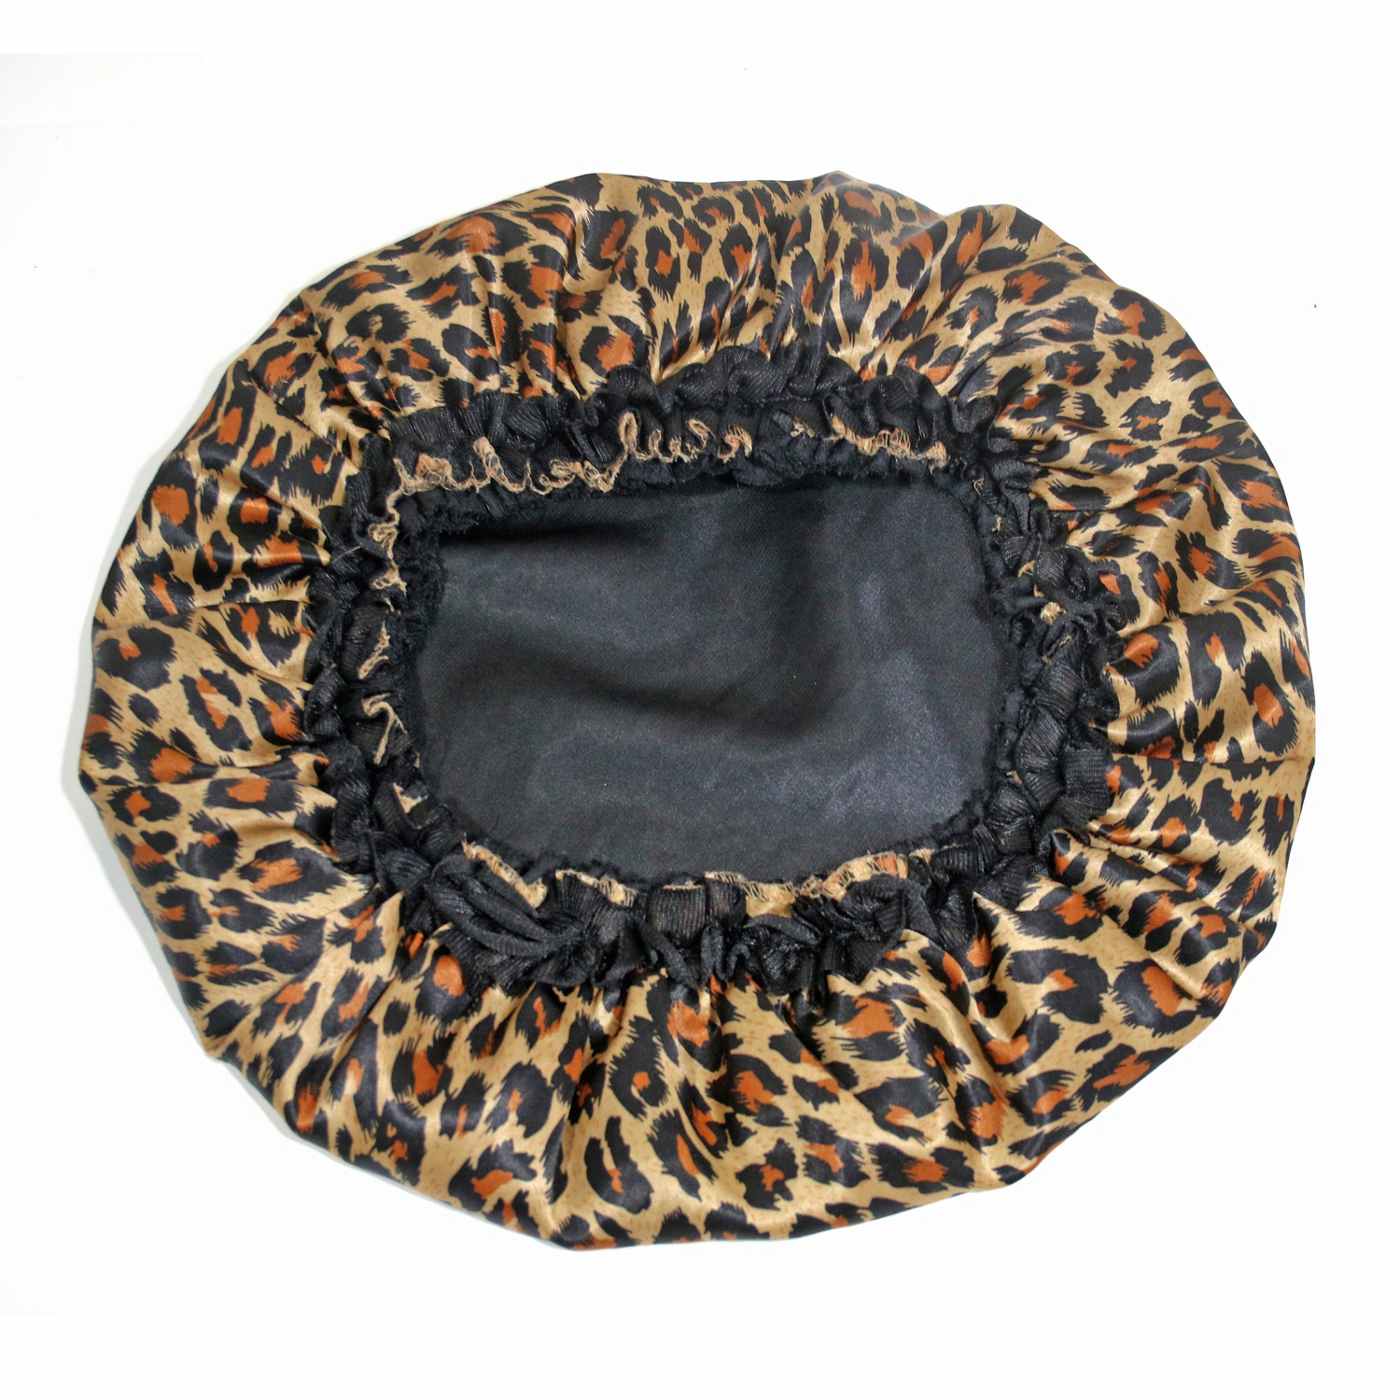 Evolve Black Satin Bonnet - Cheetah Print; image 3 of 6